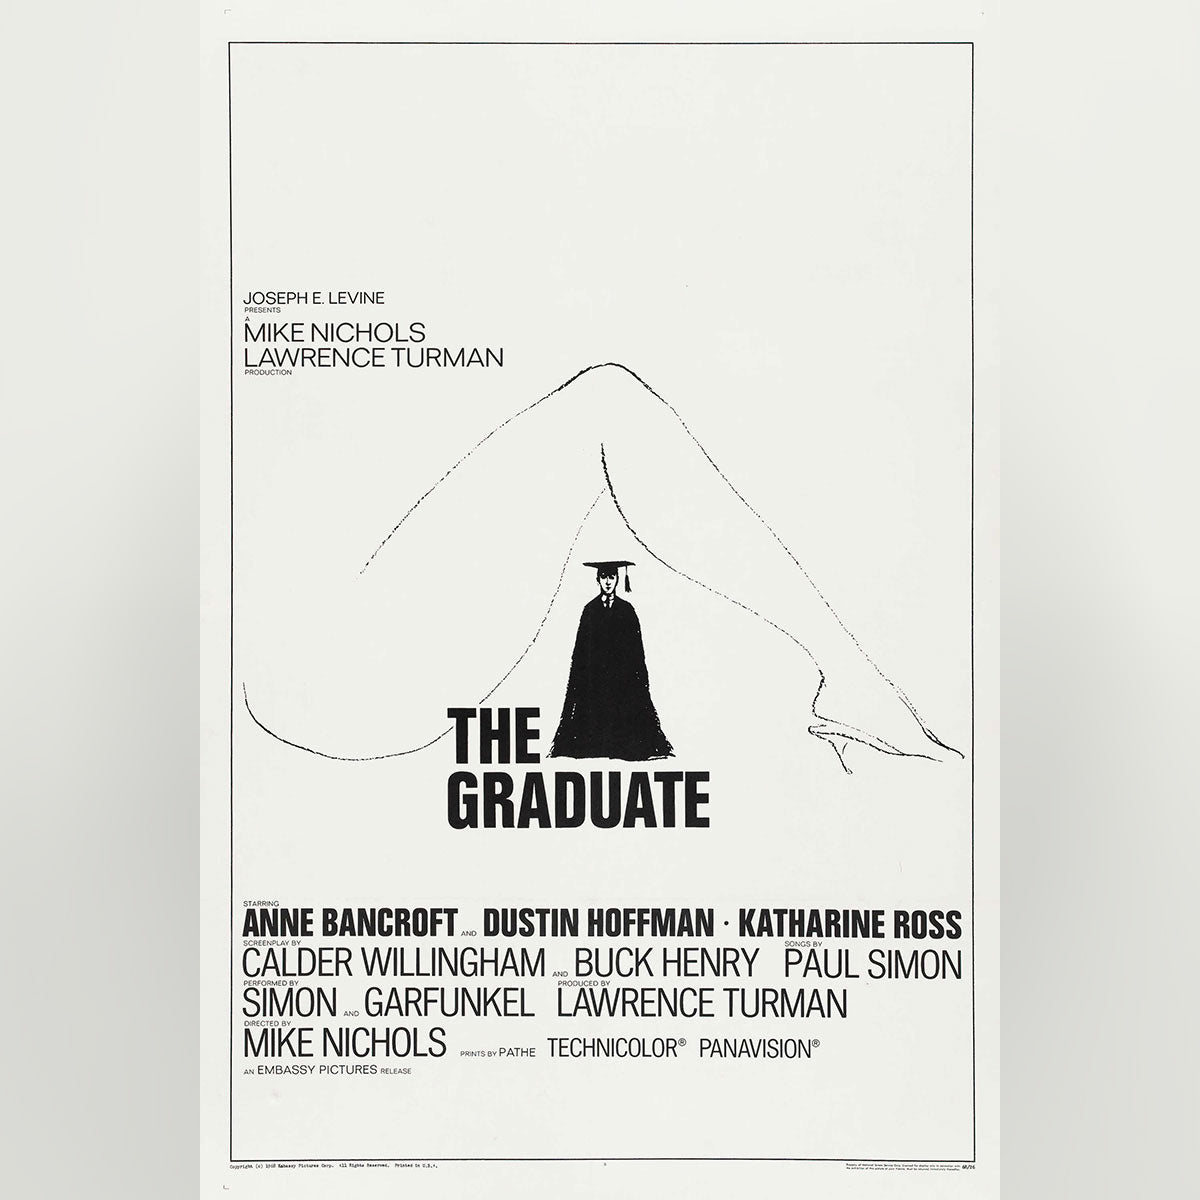 Original Movie Poster of Graduate, The (1967)